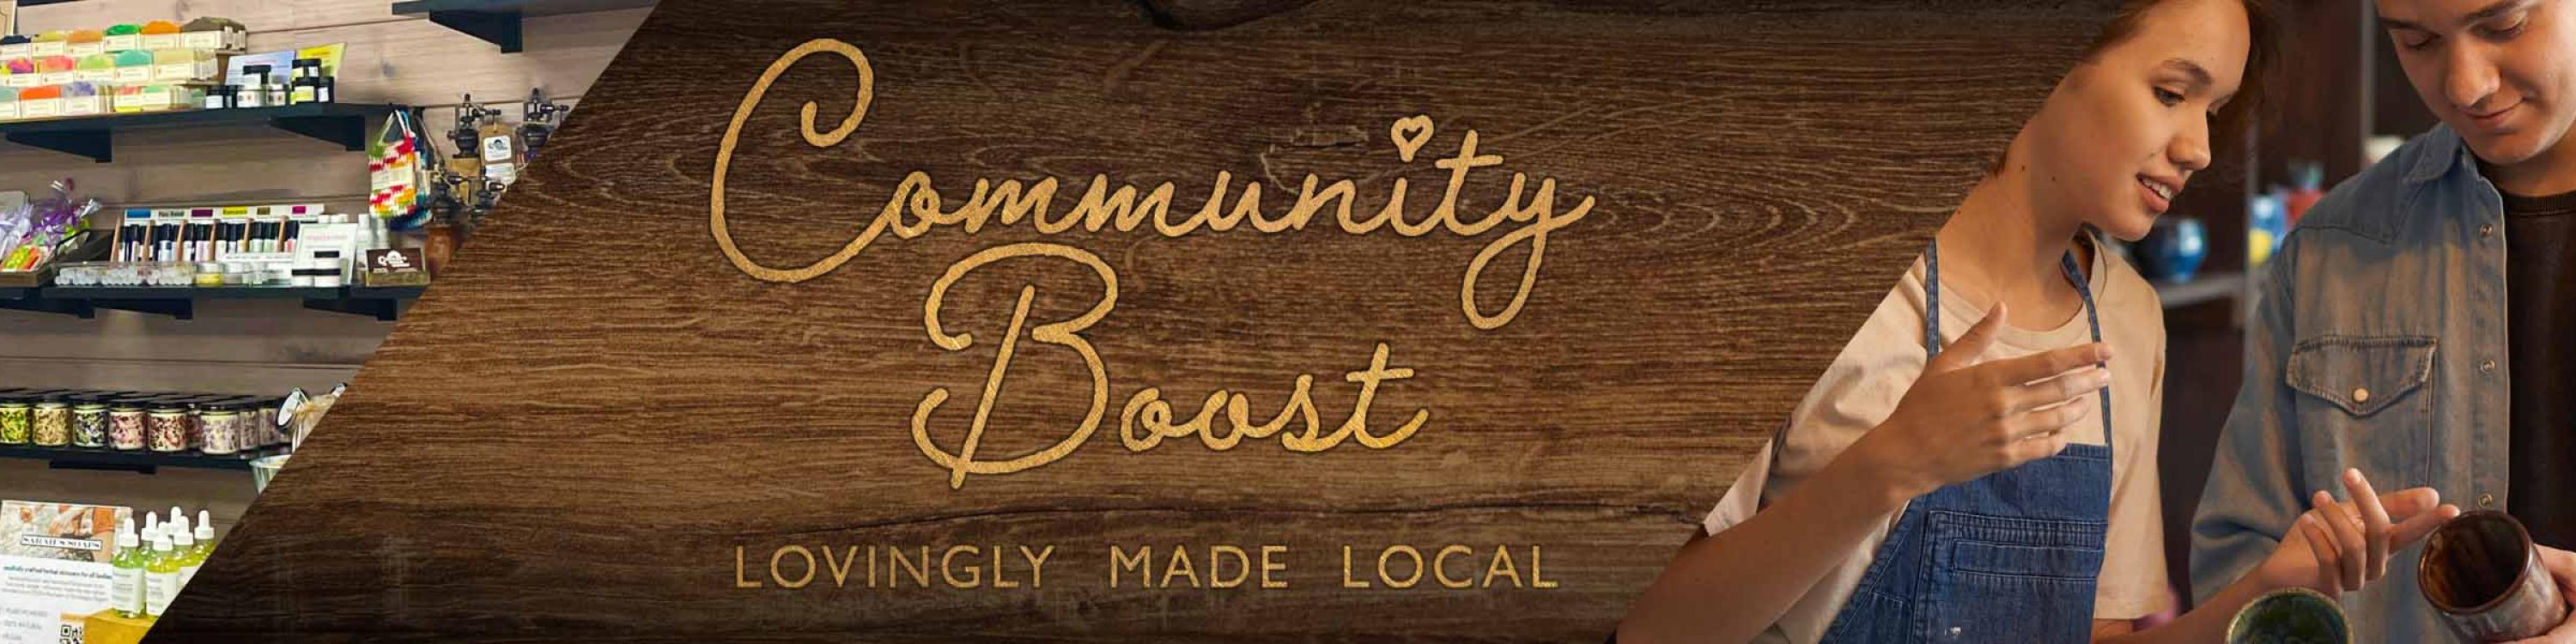 Community Boost Retail Program